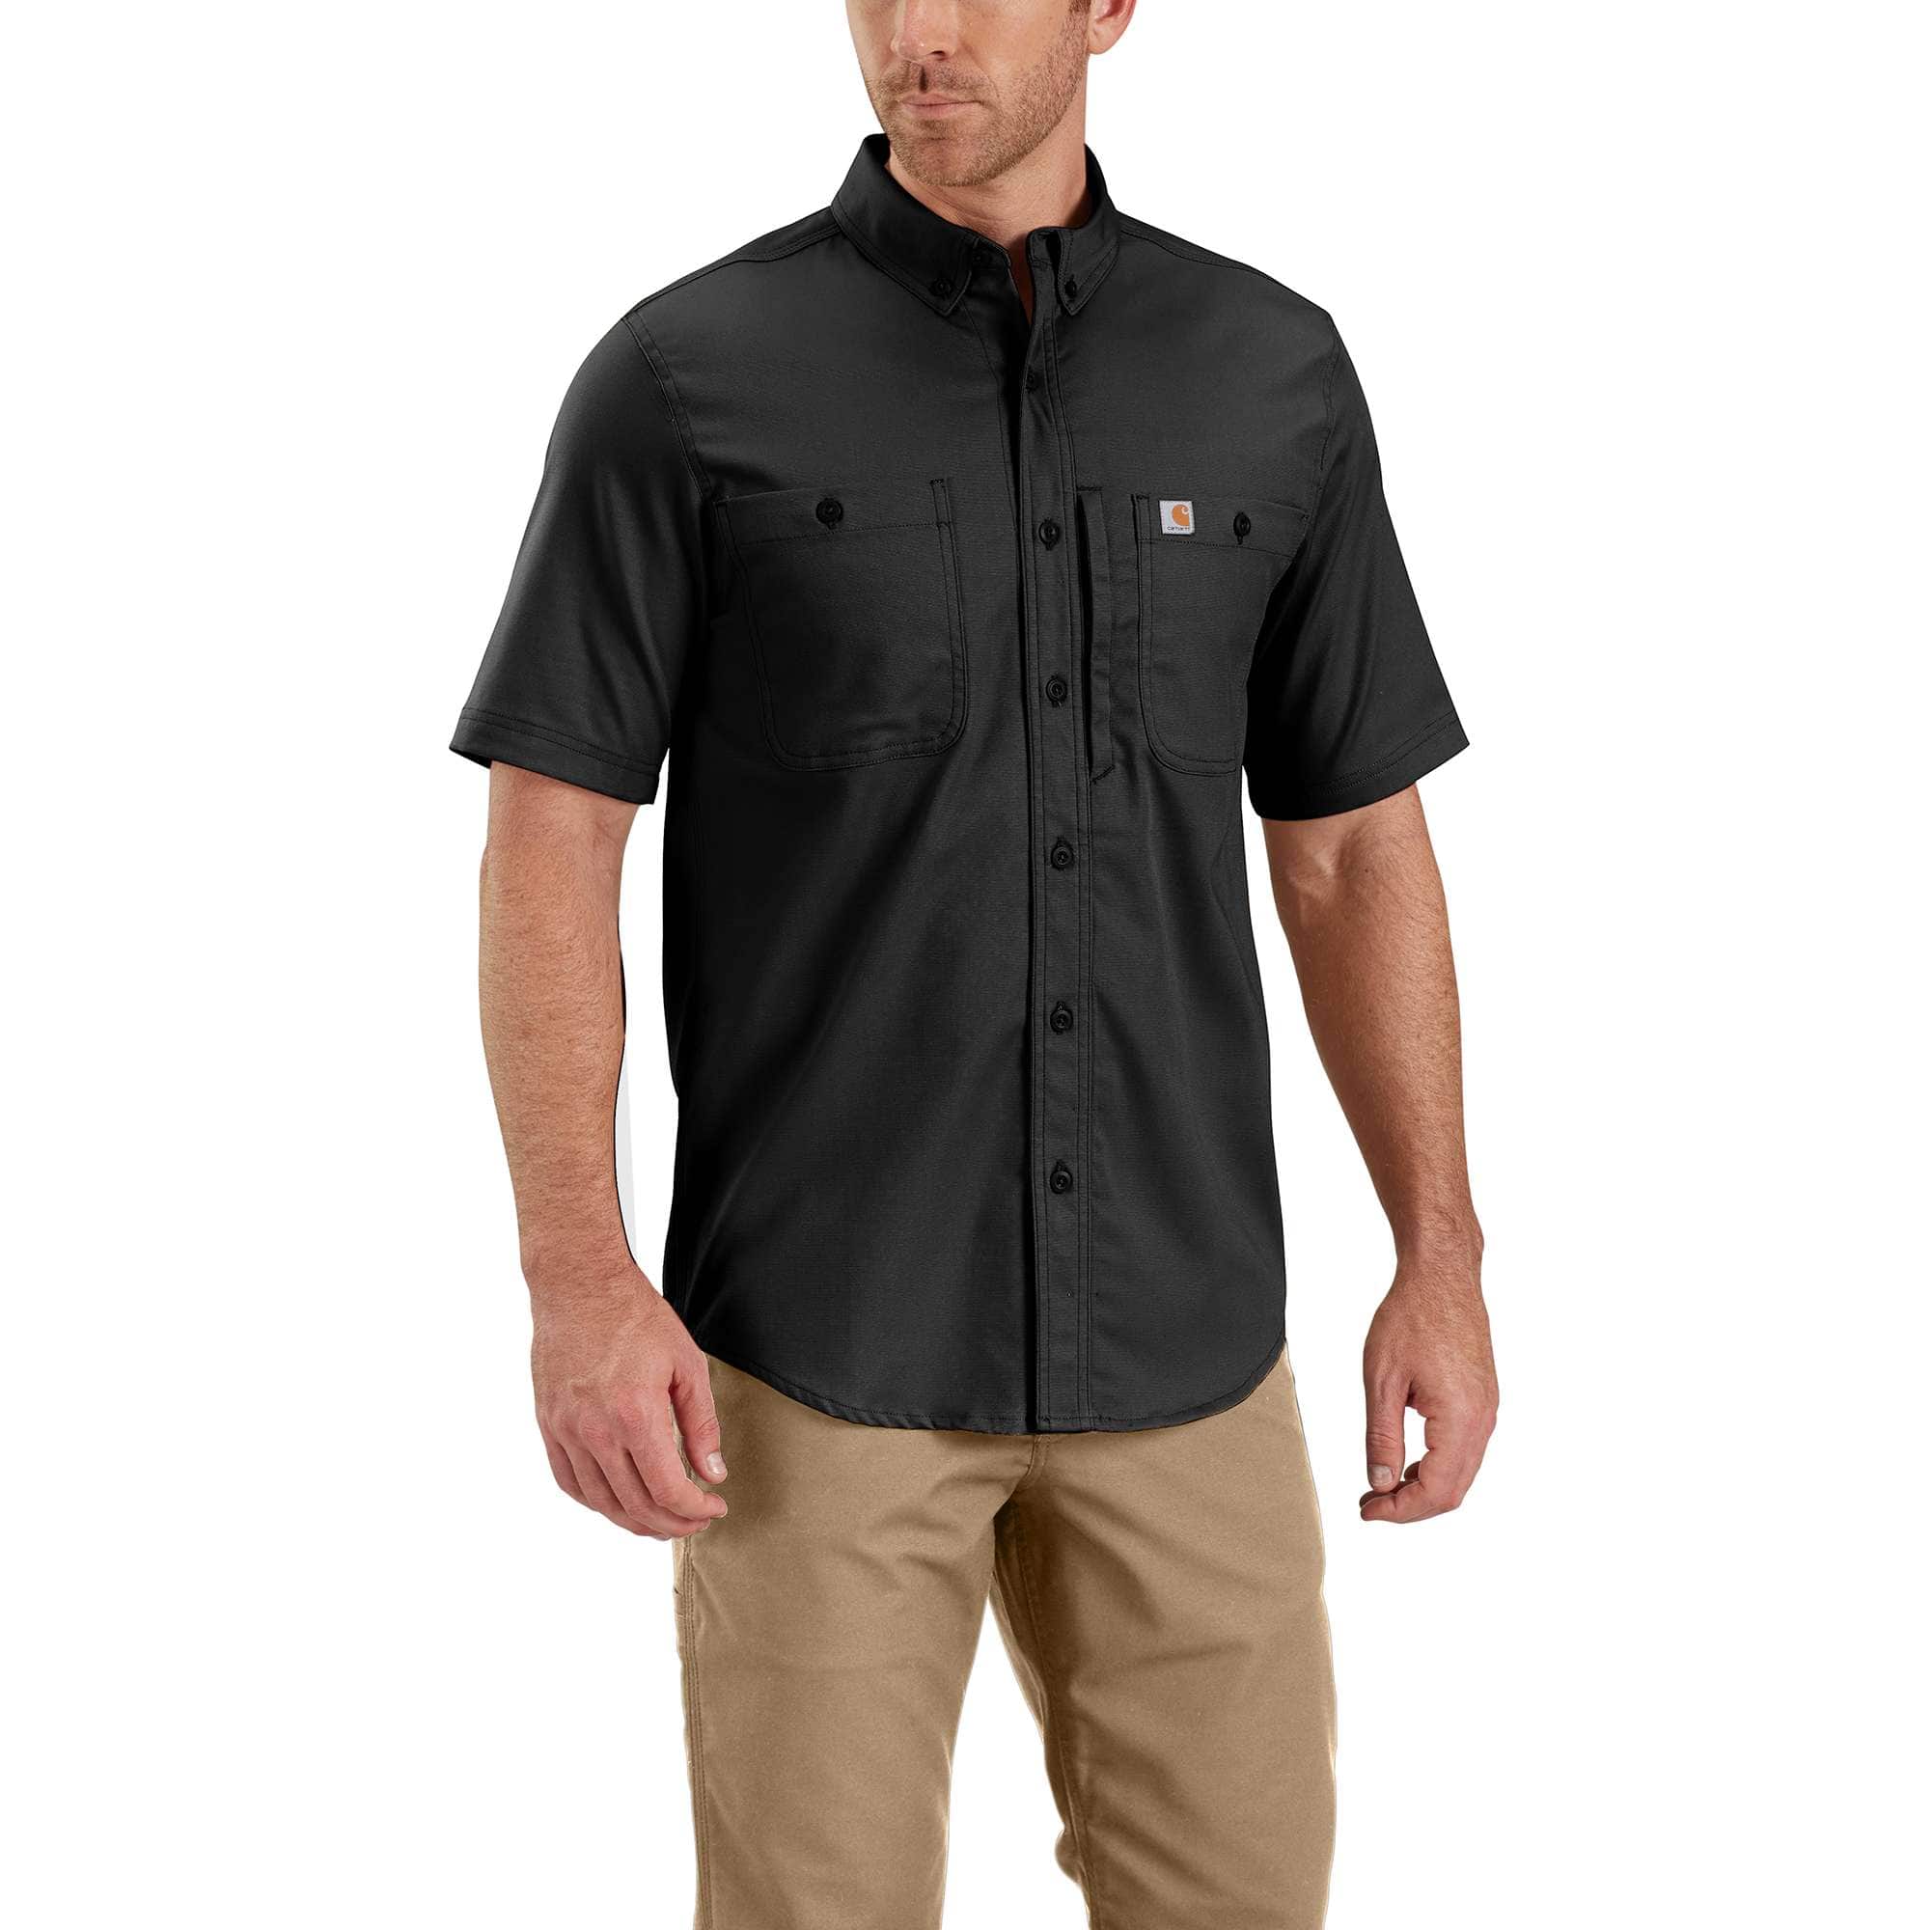 Rugged Professional™ Series Short-Sleeve Shirt